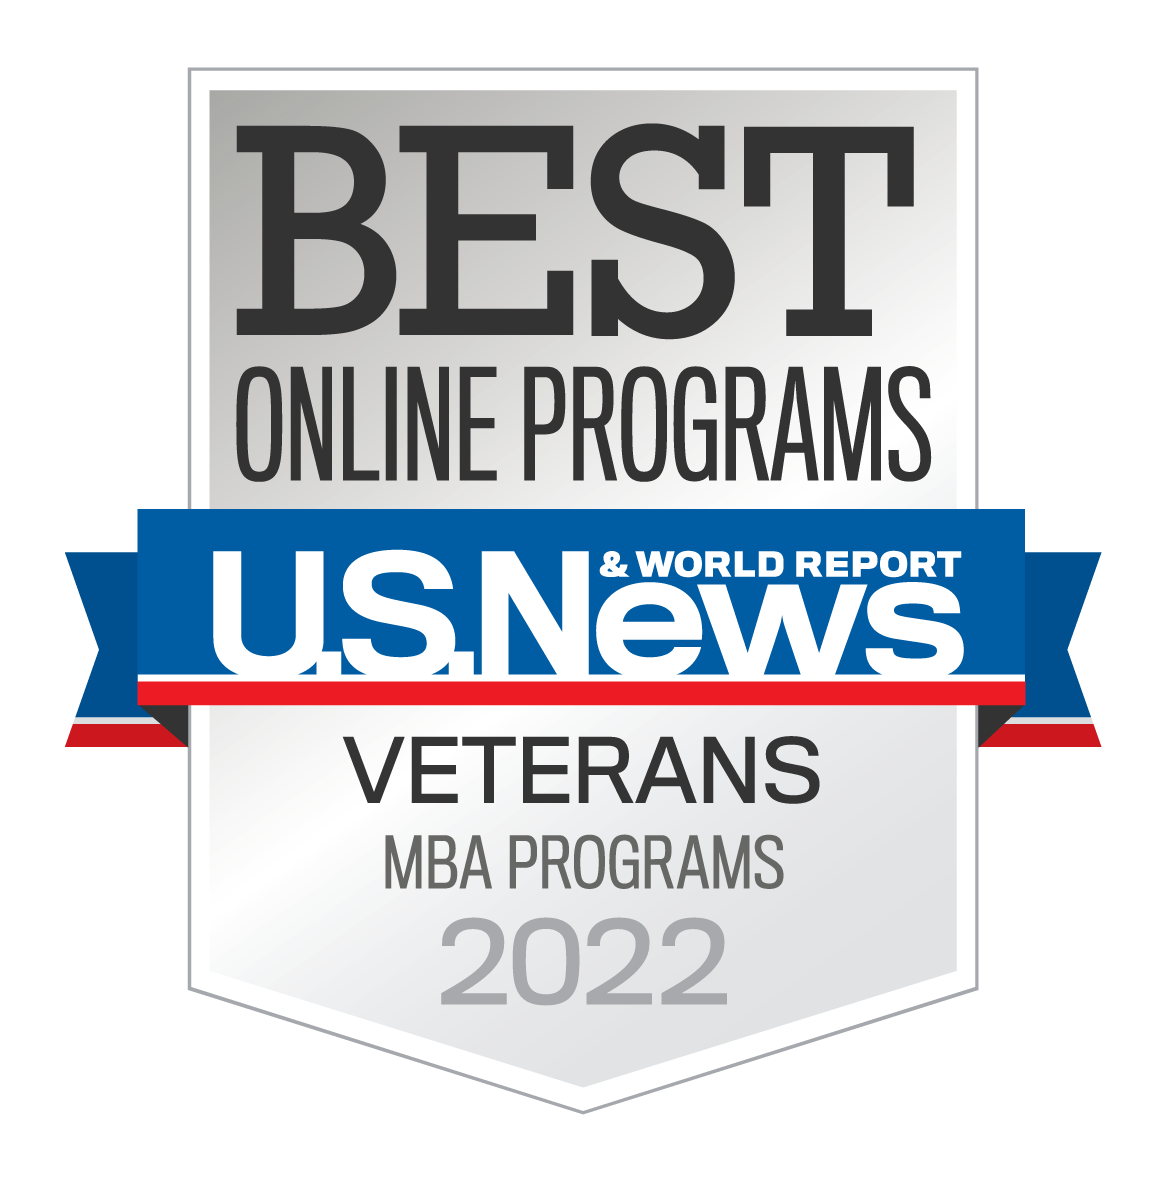 Best Online Programs U.S. News and World Report Veterans MBA 2022